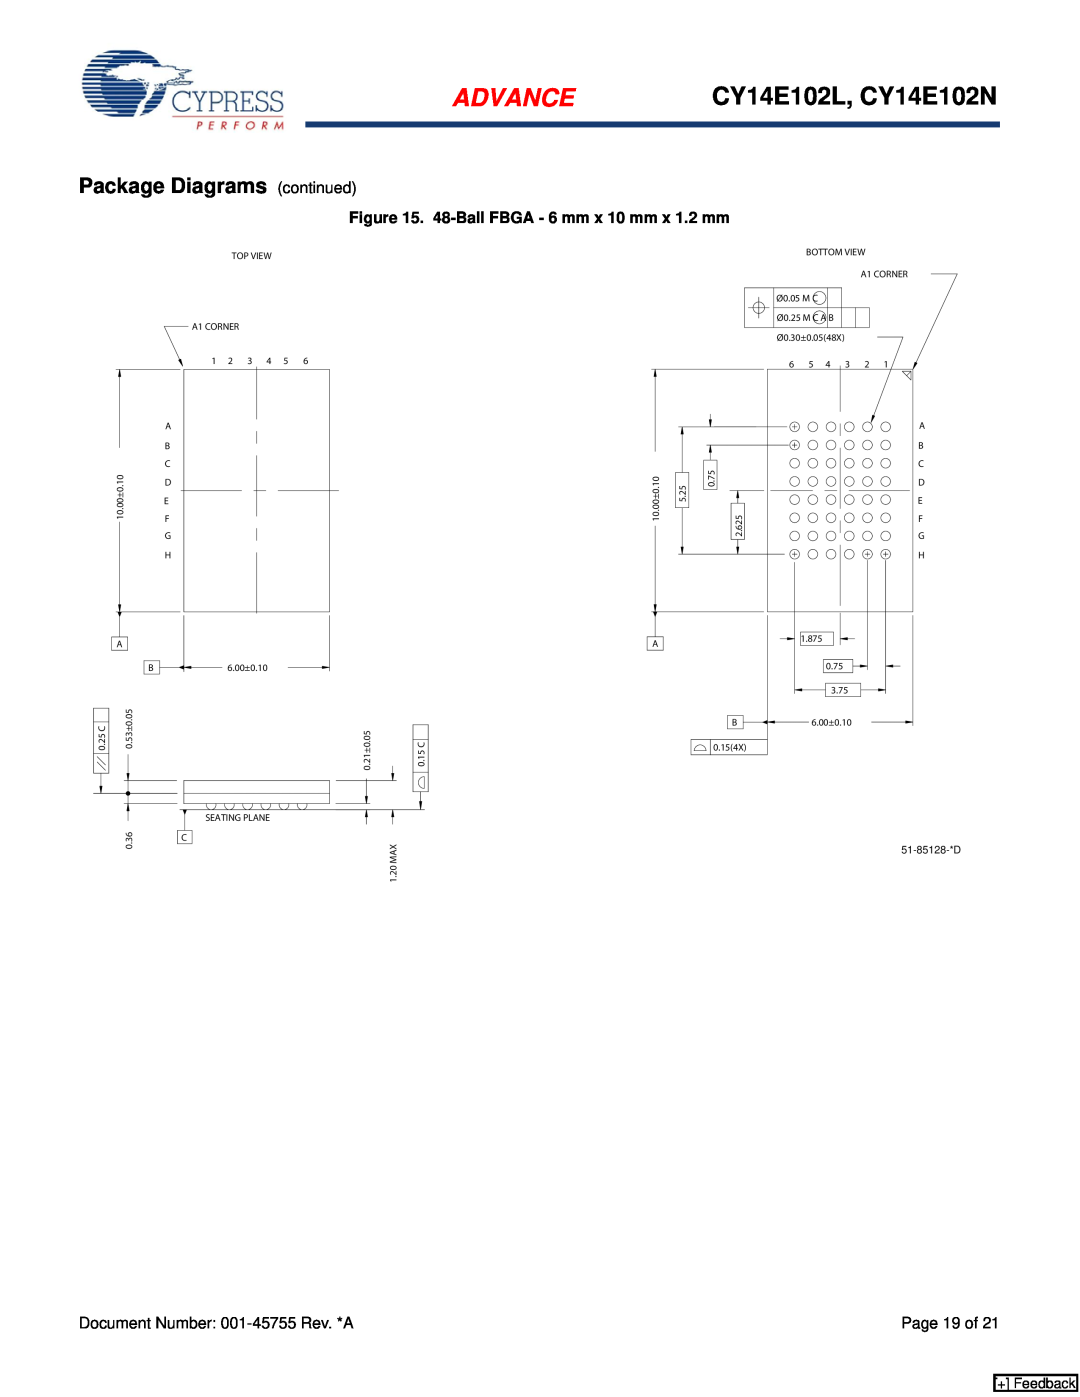 Cypress Package Diagrams continued, 48-Ball FBGA - 6 mm x 10 mm x 1.2 mm, Advance, CY14E102L, CY14E102N, + Feedback 